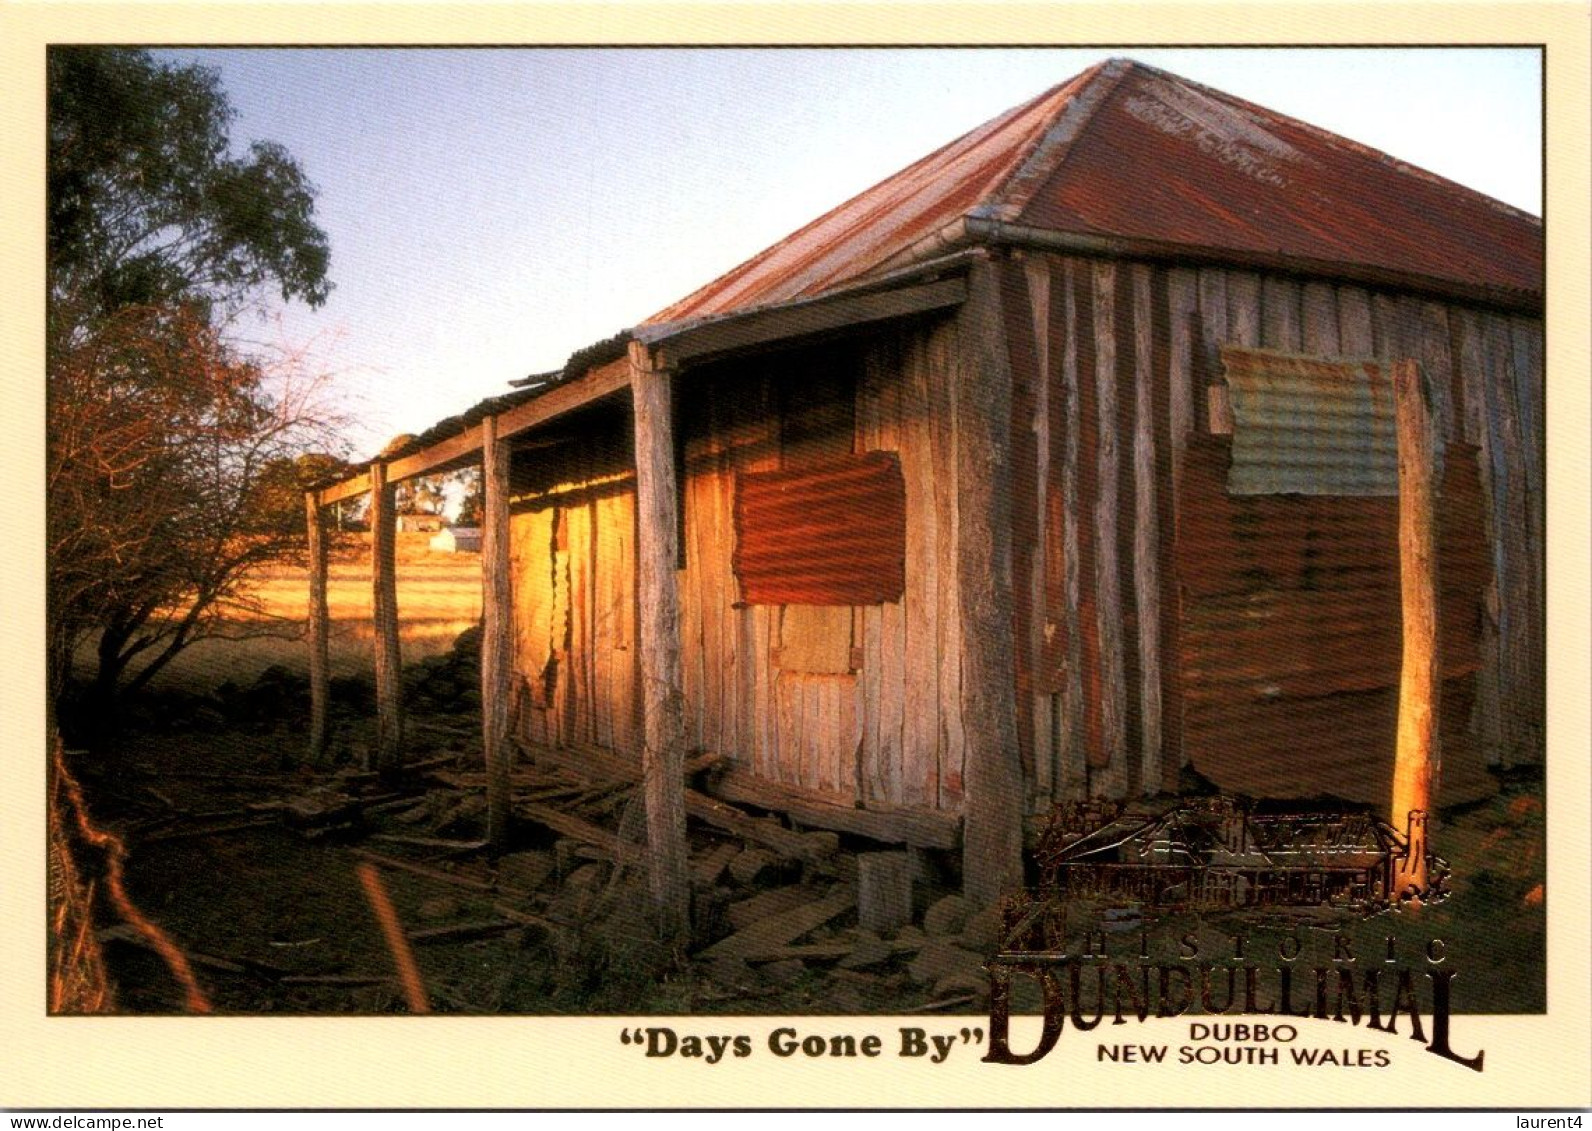 2-9-2023 (4 T 5) Australia - NSW - Dubbo Historic Dundullimal (Days Gone By) - Dubbo